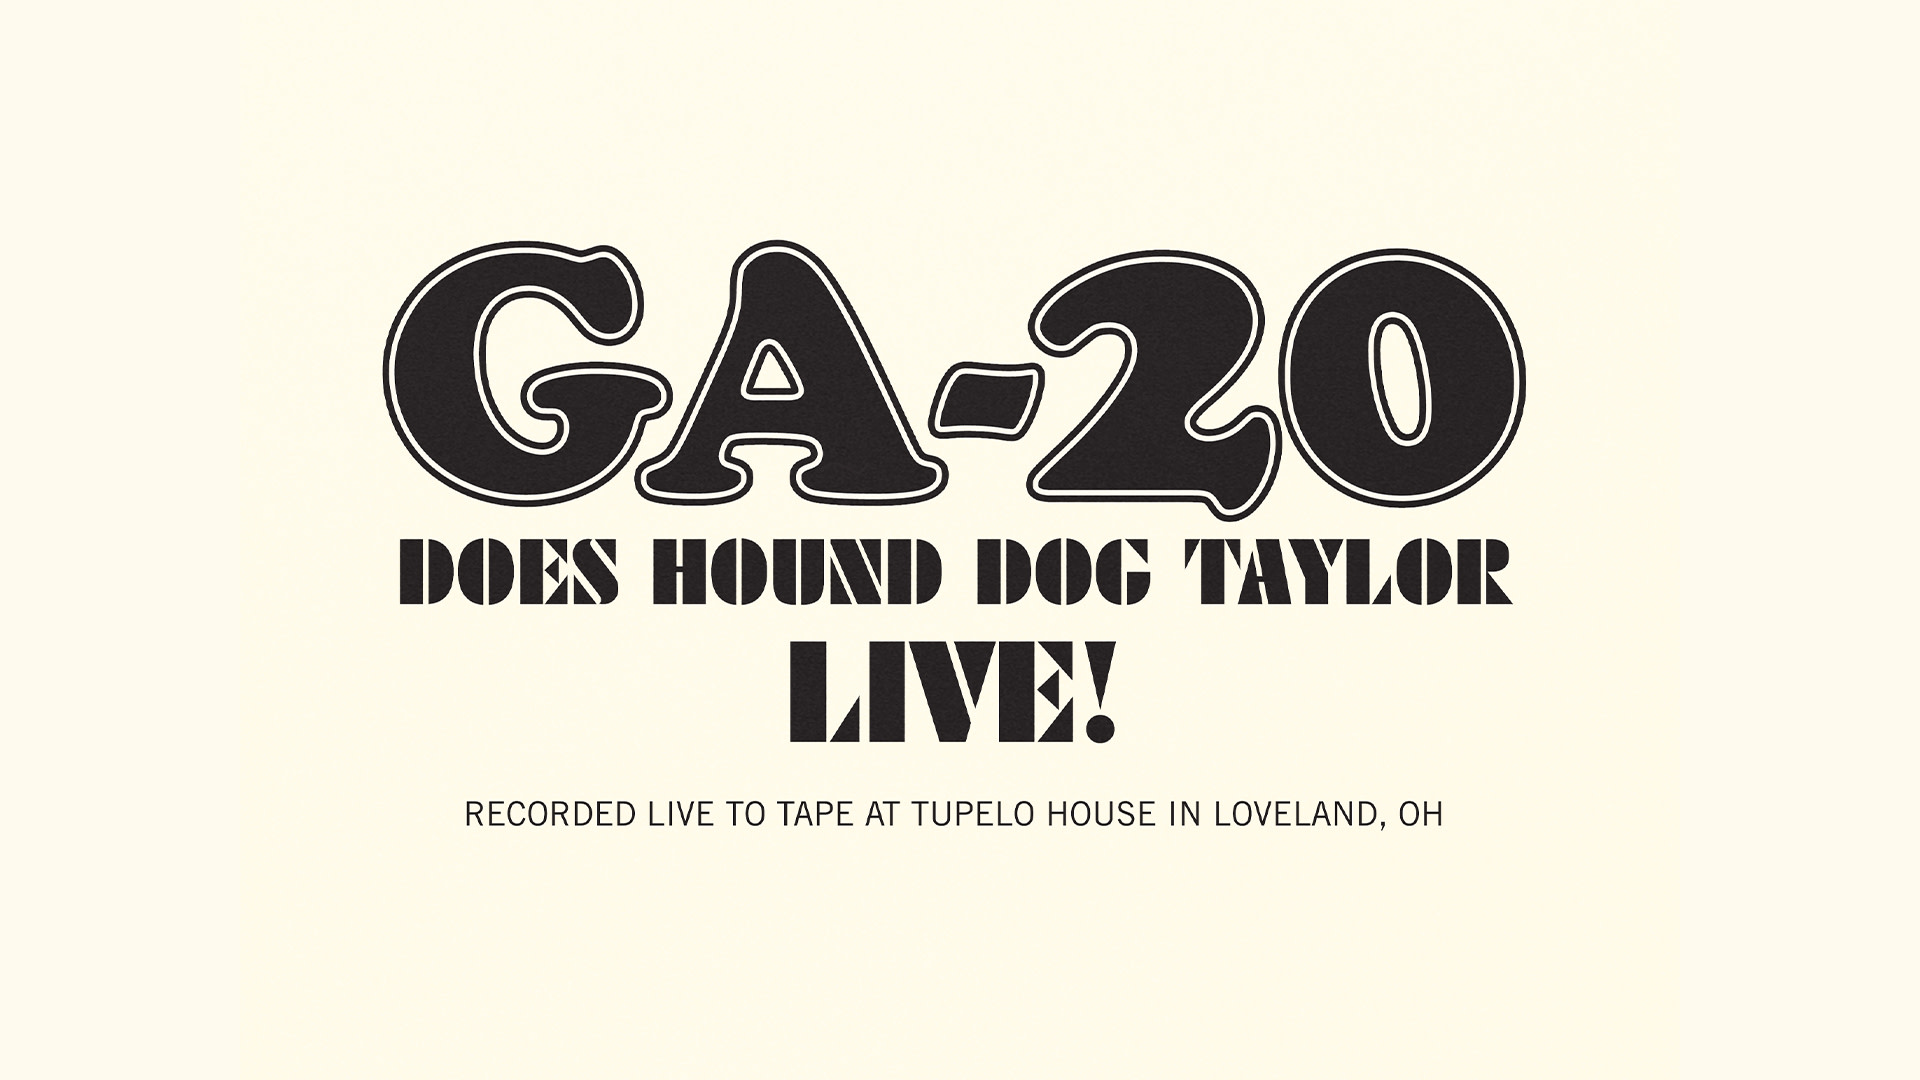 Hound Dog Taylor  Blues music, Blues musicians, Hound dog